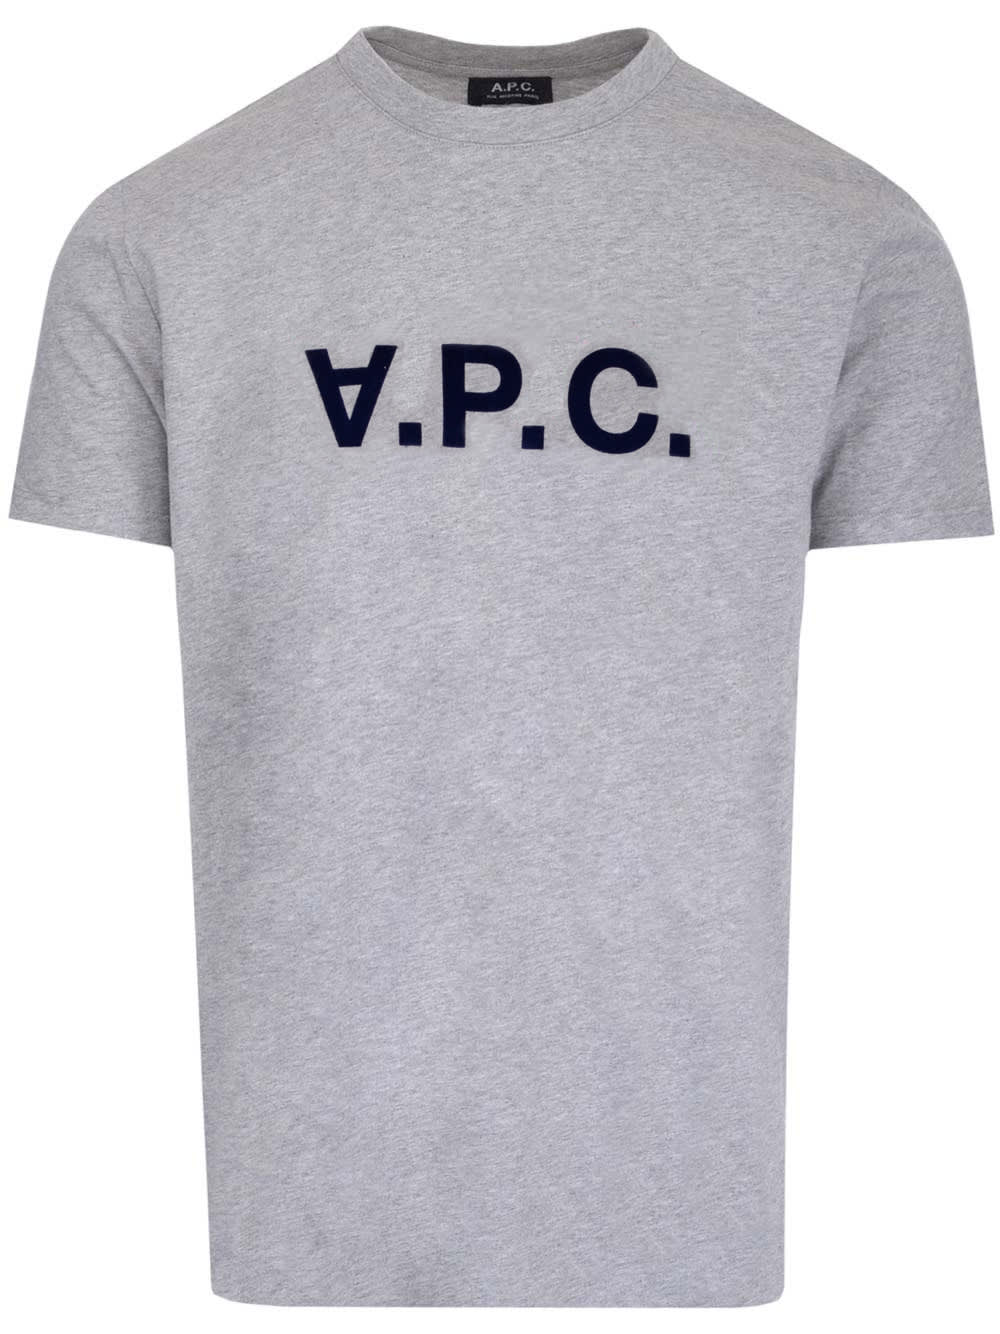 APC GREY VPC T-SHIRT